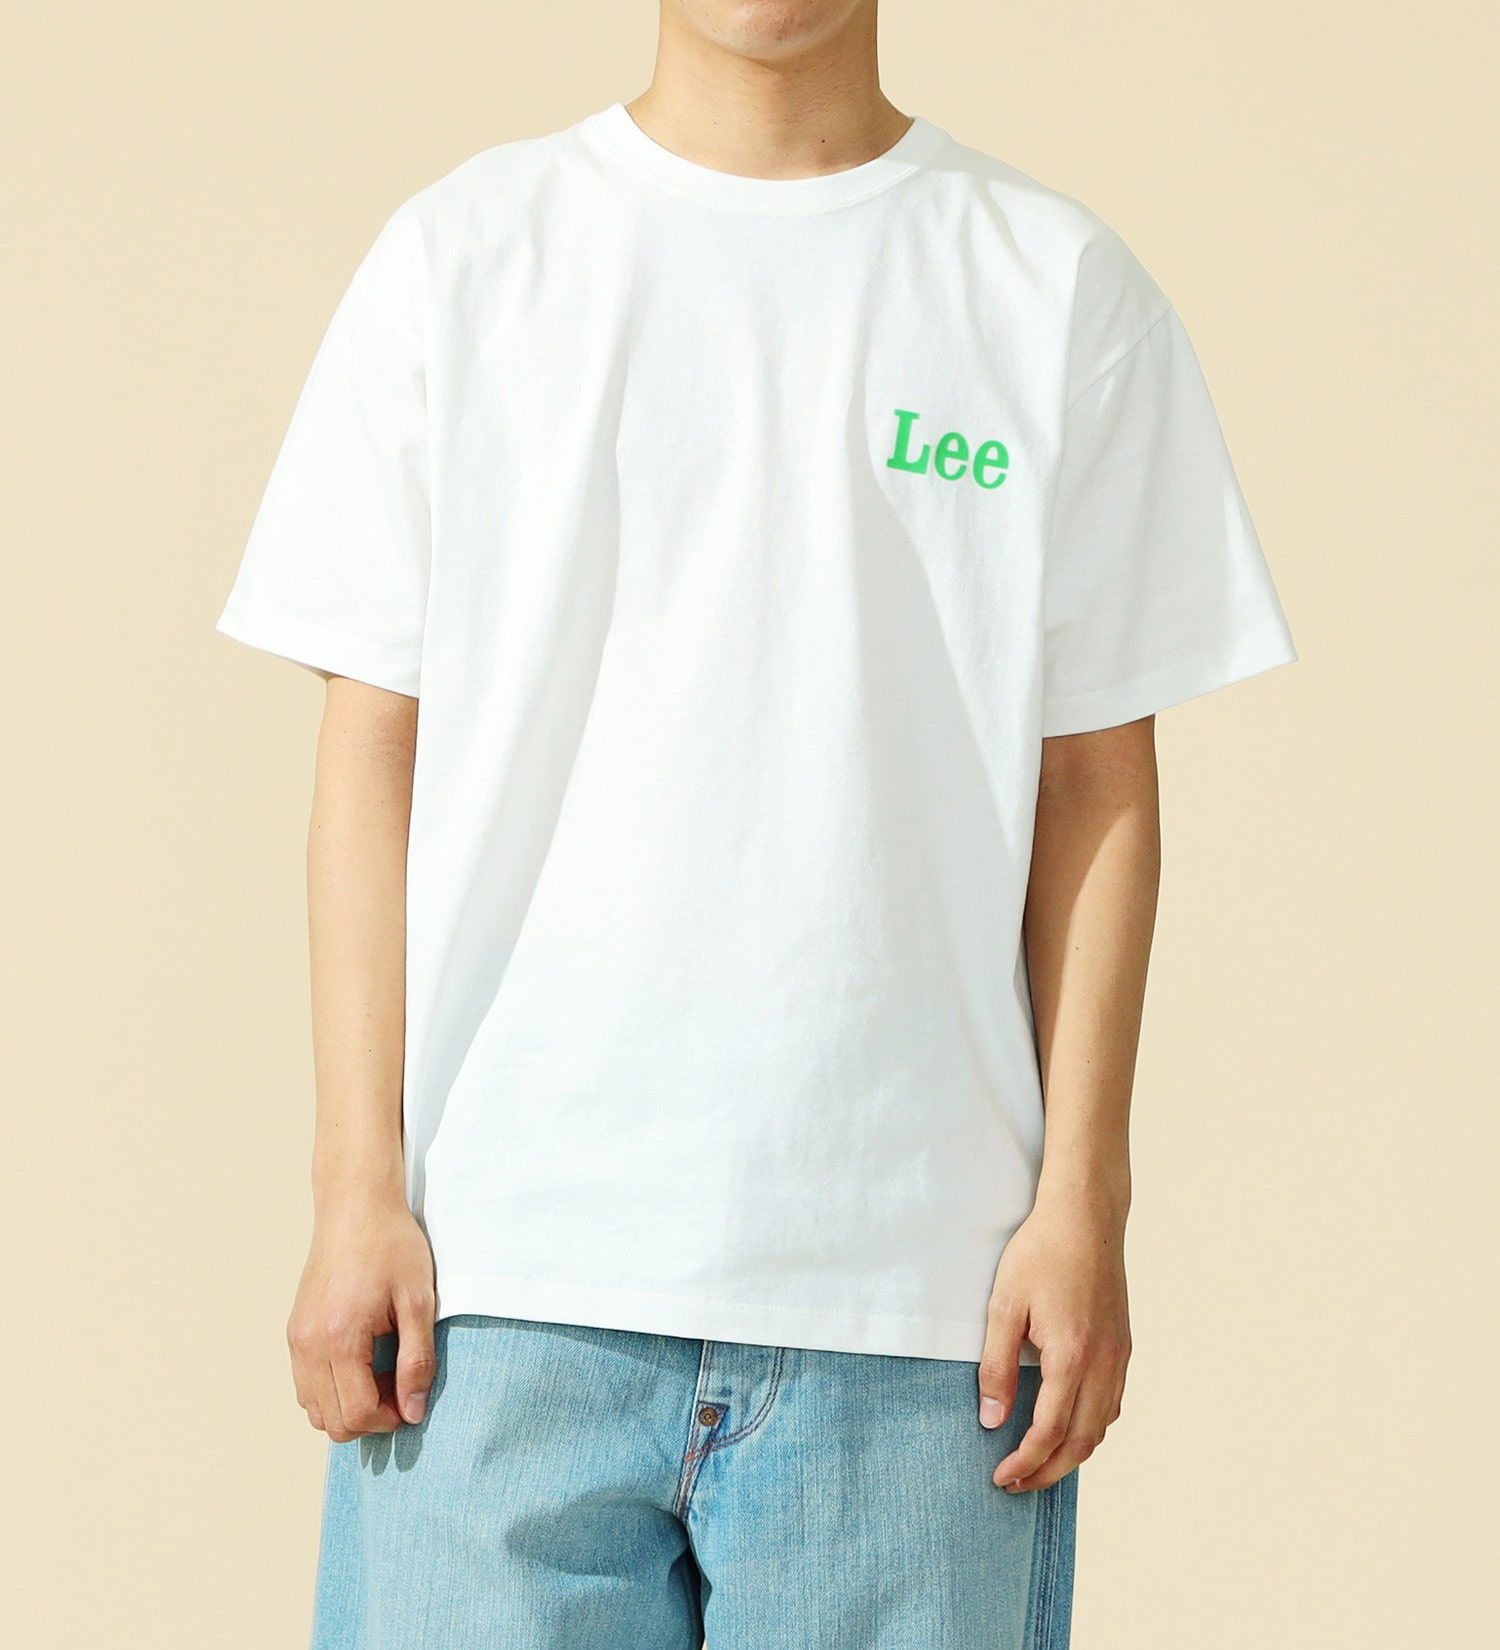 Lee(リー)の【ポイントアップ対象】ブルドッグ フロッキープリント ショートスリーブTee|トップス/Tシャツ/カットソー/メンズ|ホワイト